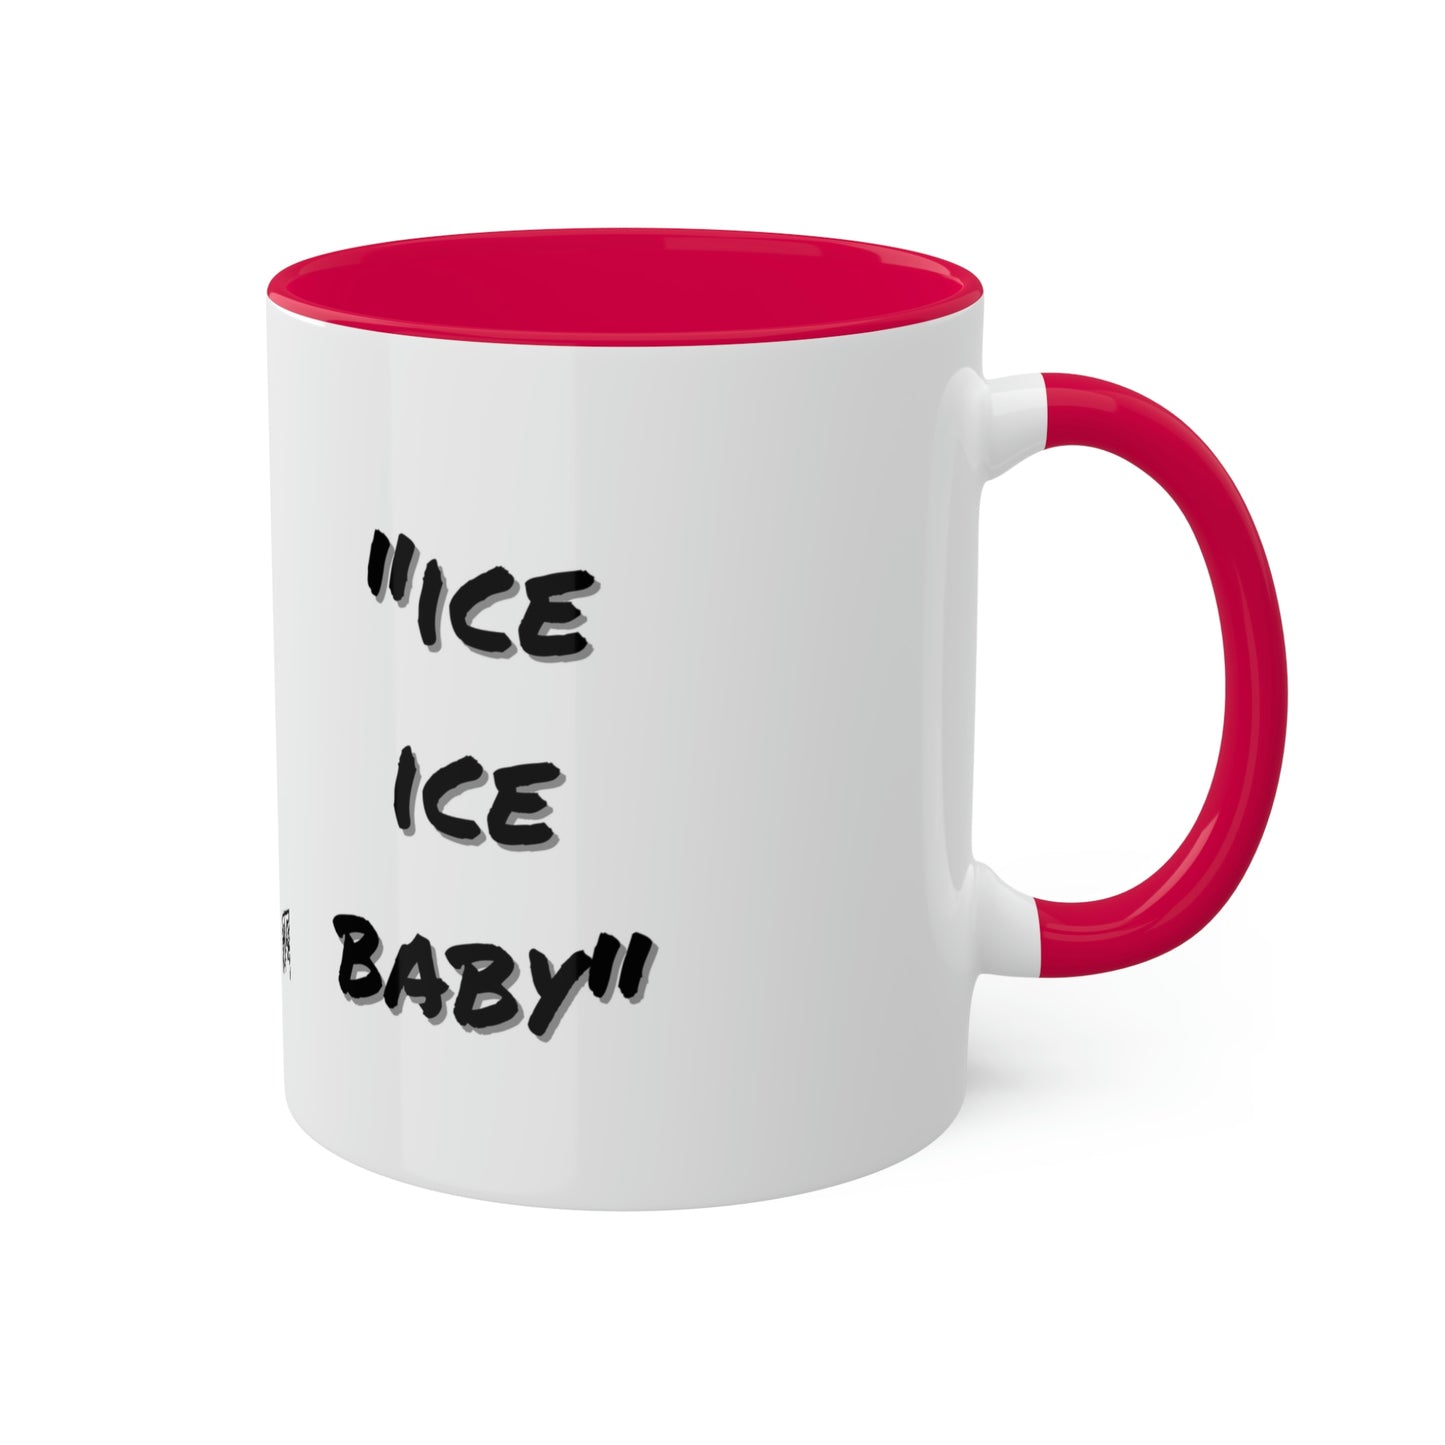 Vanilla Ice #IceIceBaby - Colorful Mugs, 11oz